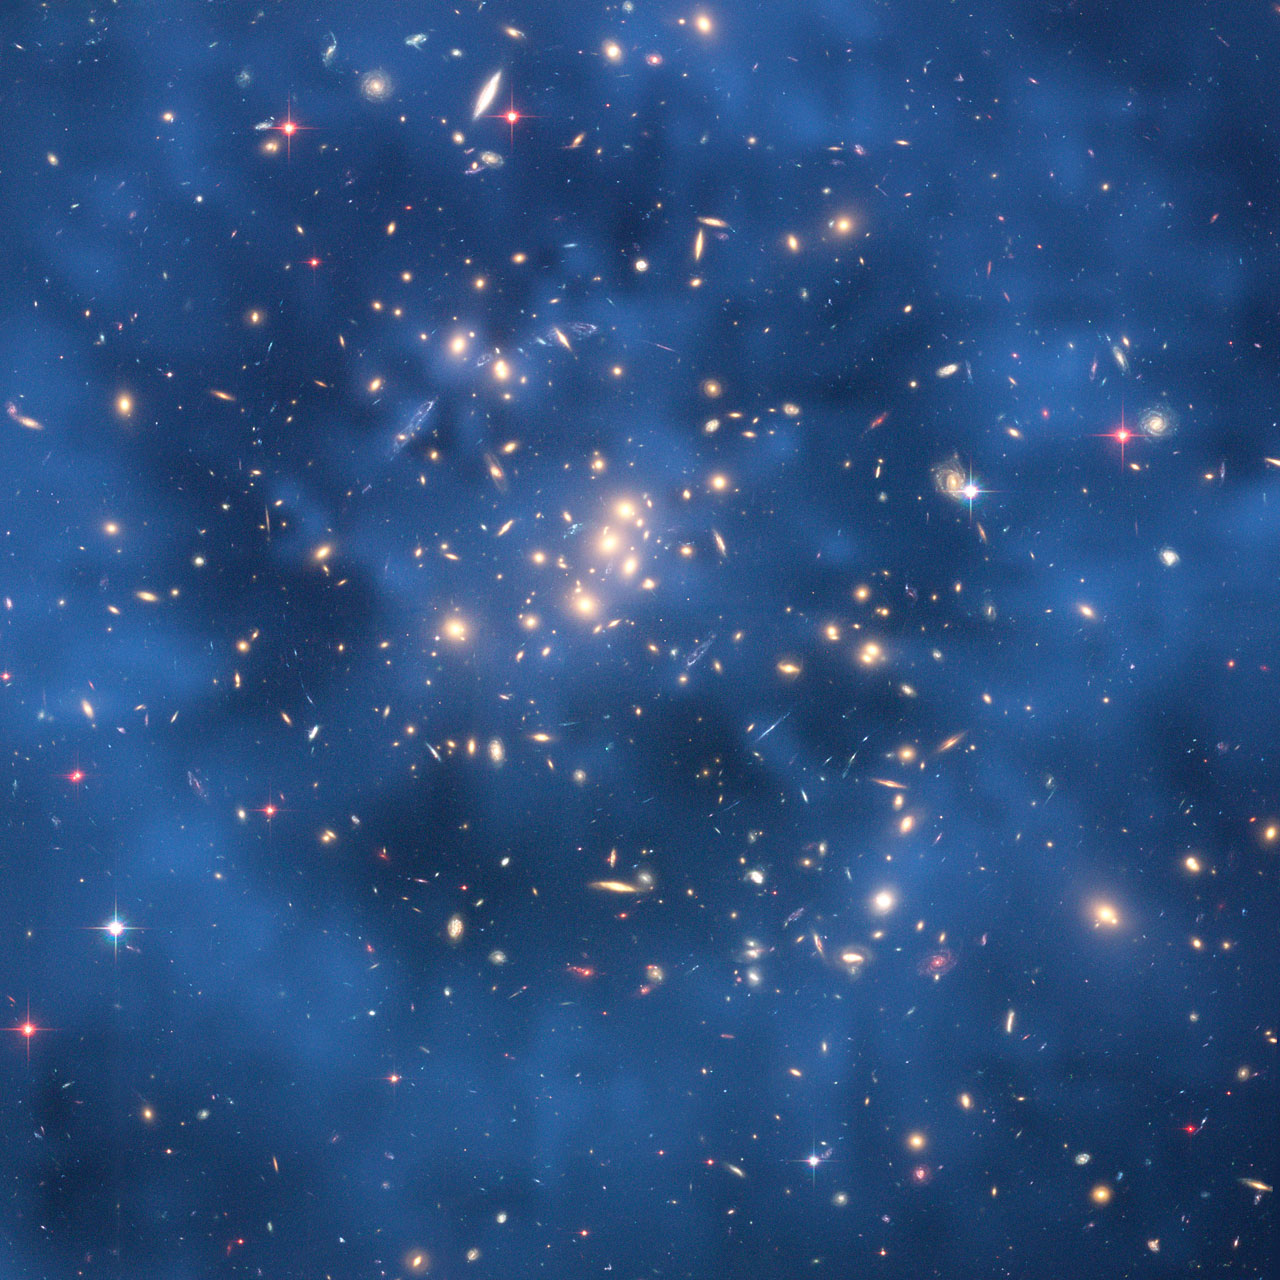 Modelirovanie kol'ca iz temnoi materii vokrug skopleniya galaktik CL0024+17